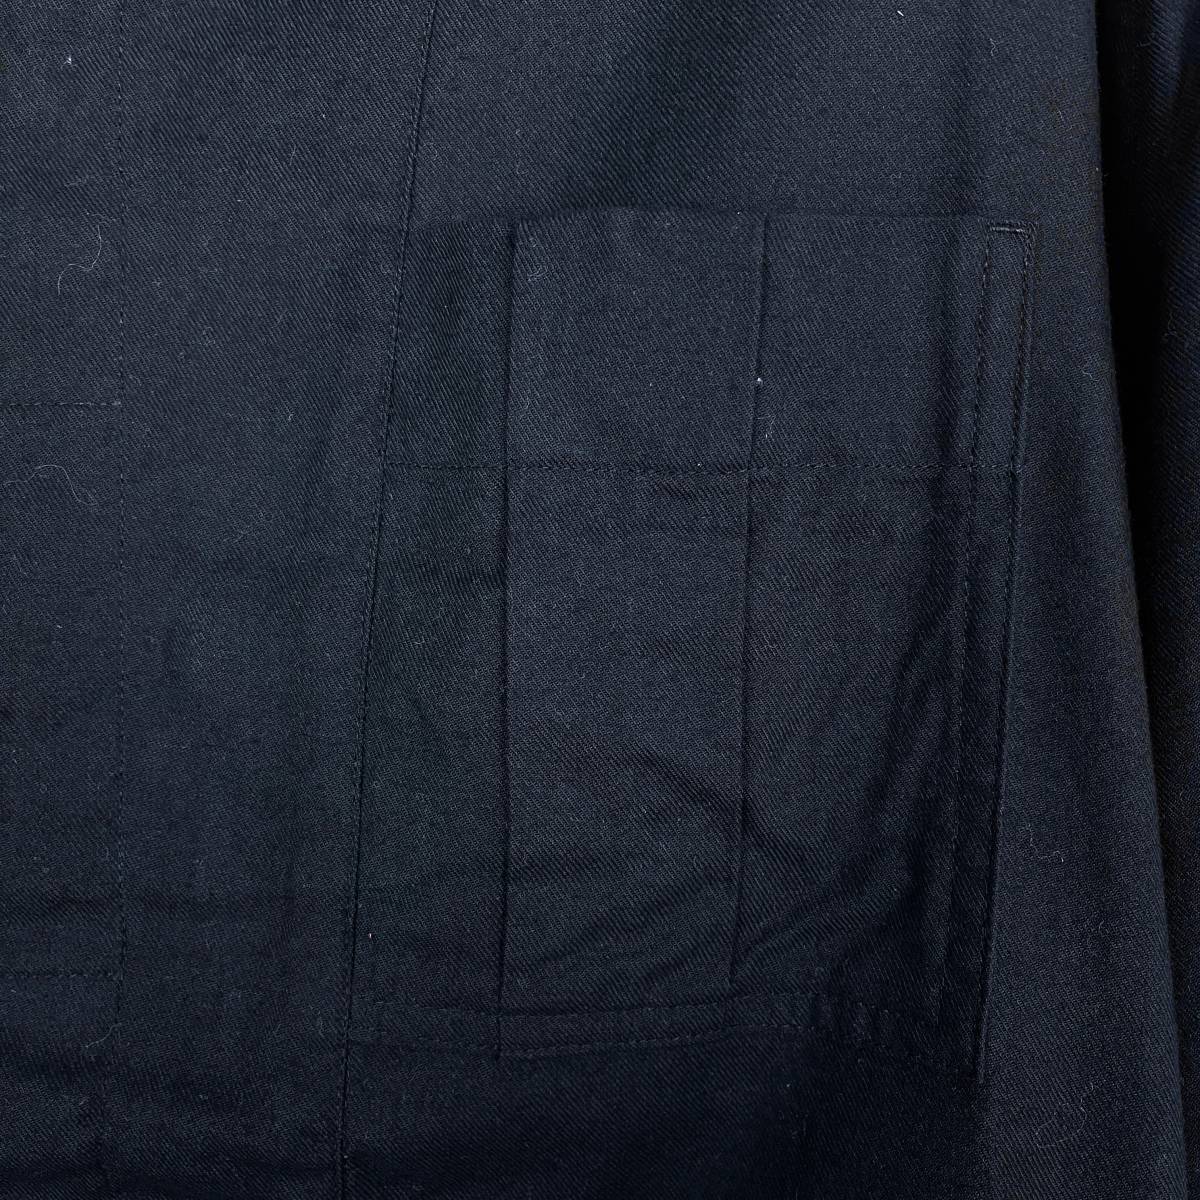 HAIDER ACKERMANN(ハイダーアッカーマン) fly front L/S shirt (black